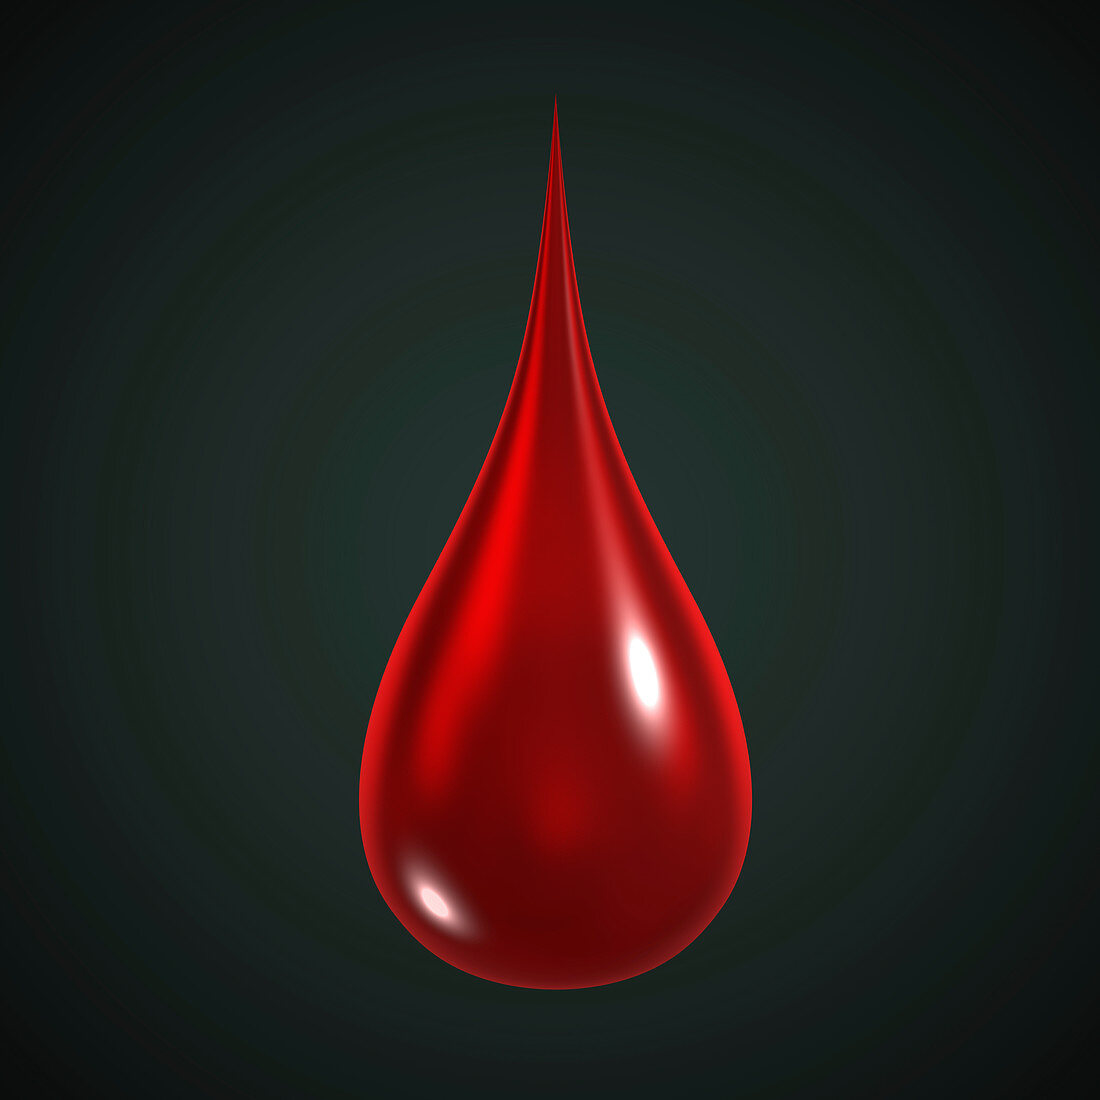 Drop of blood, illustration